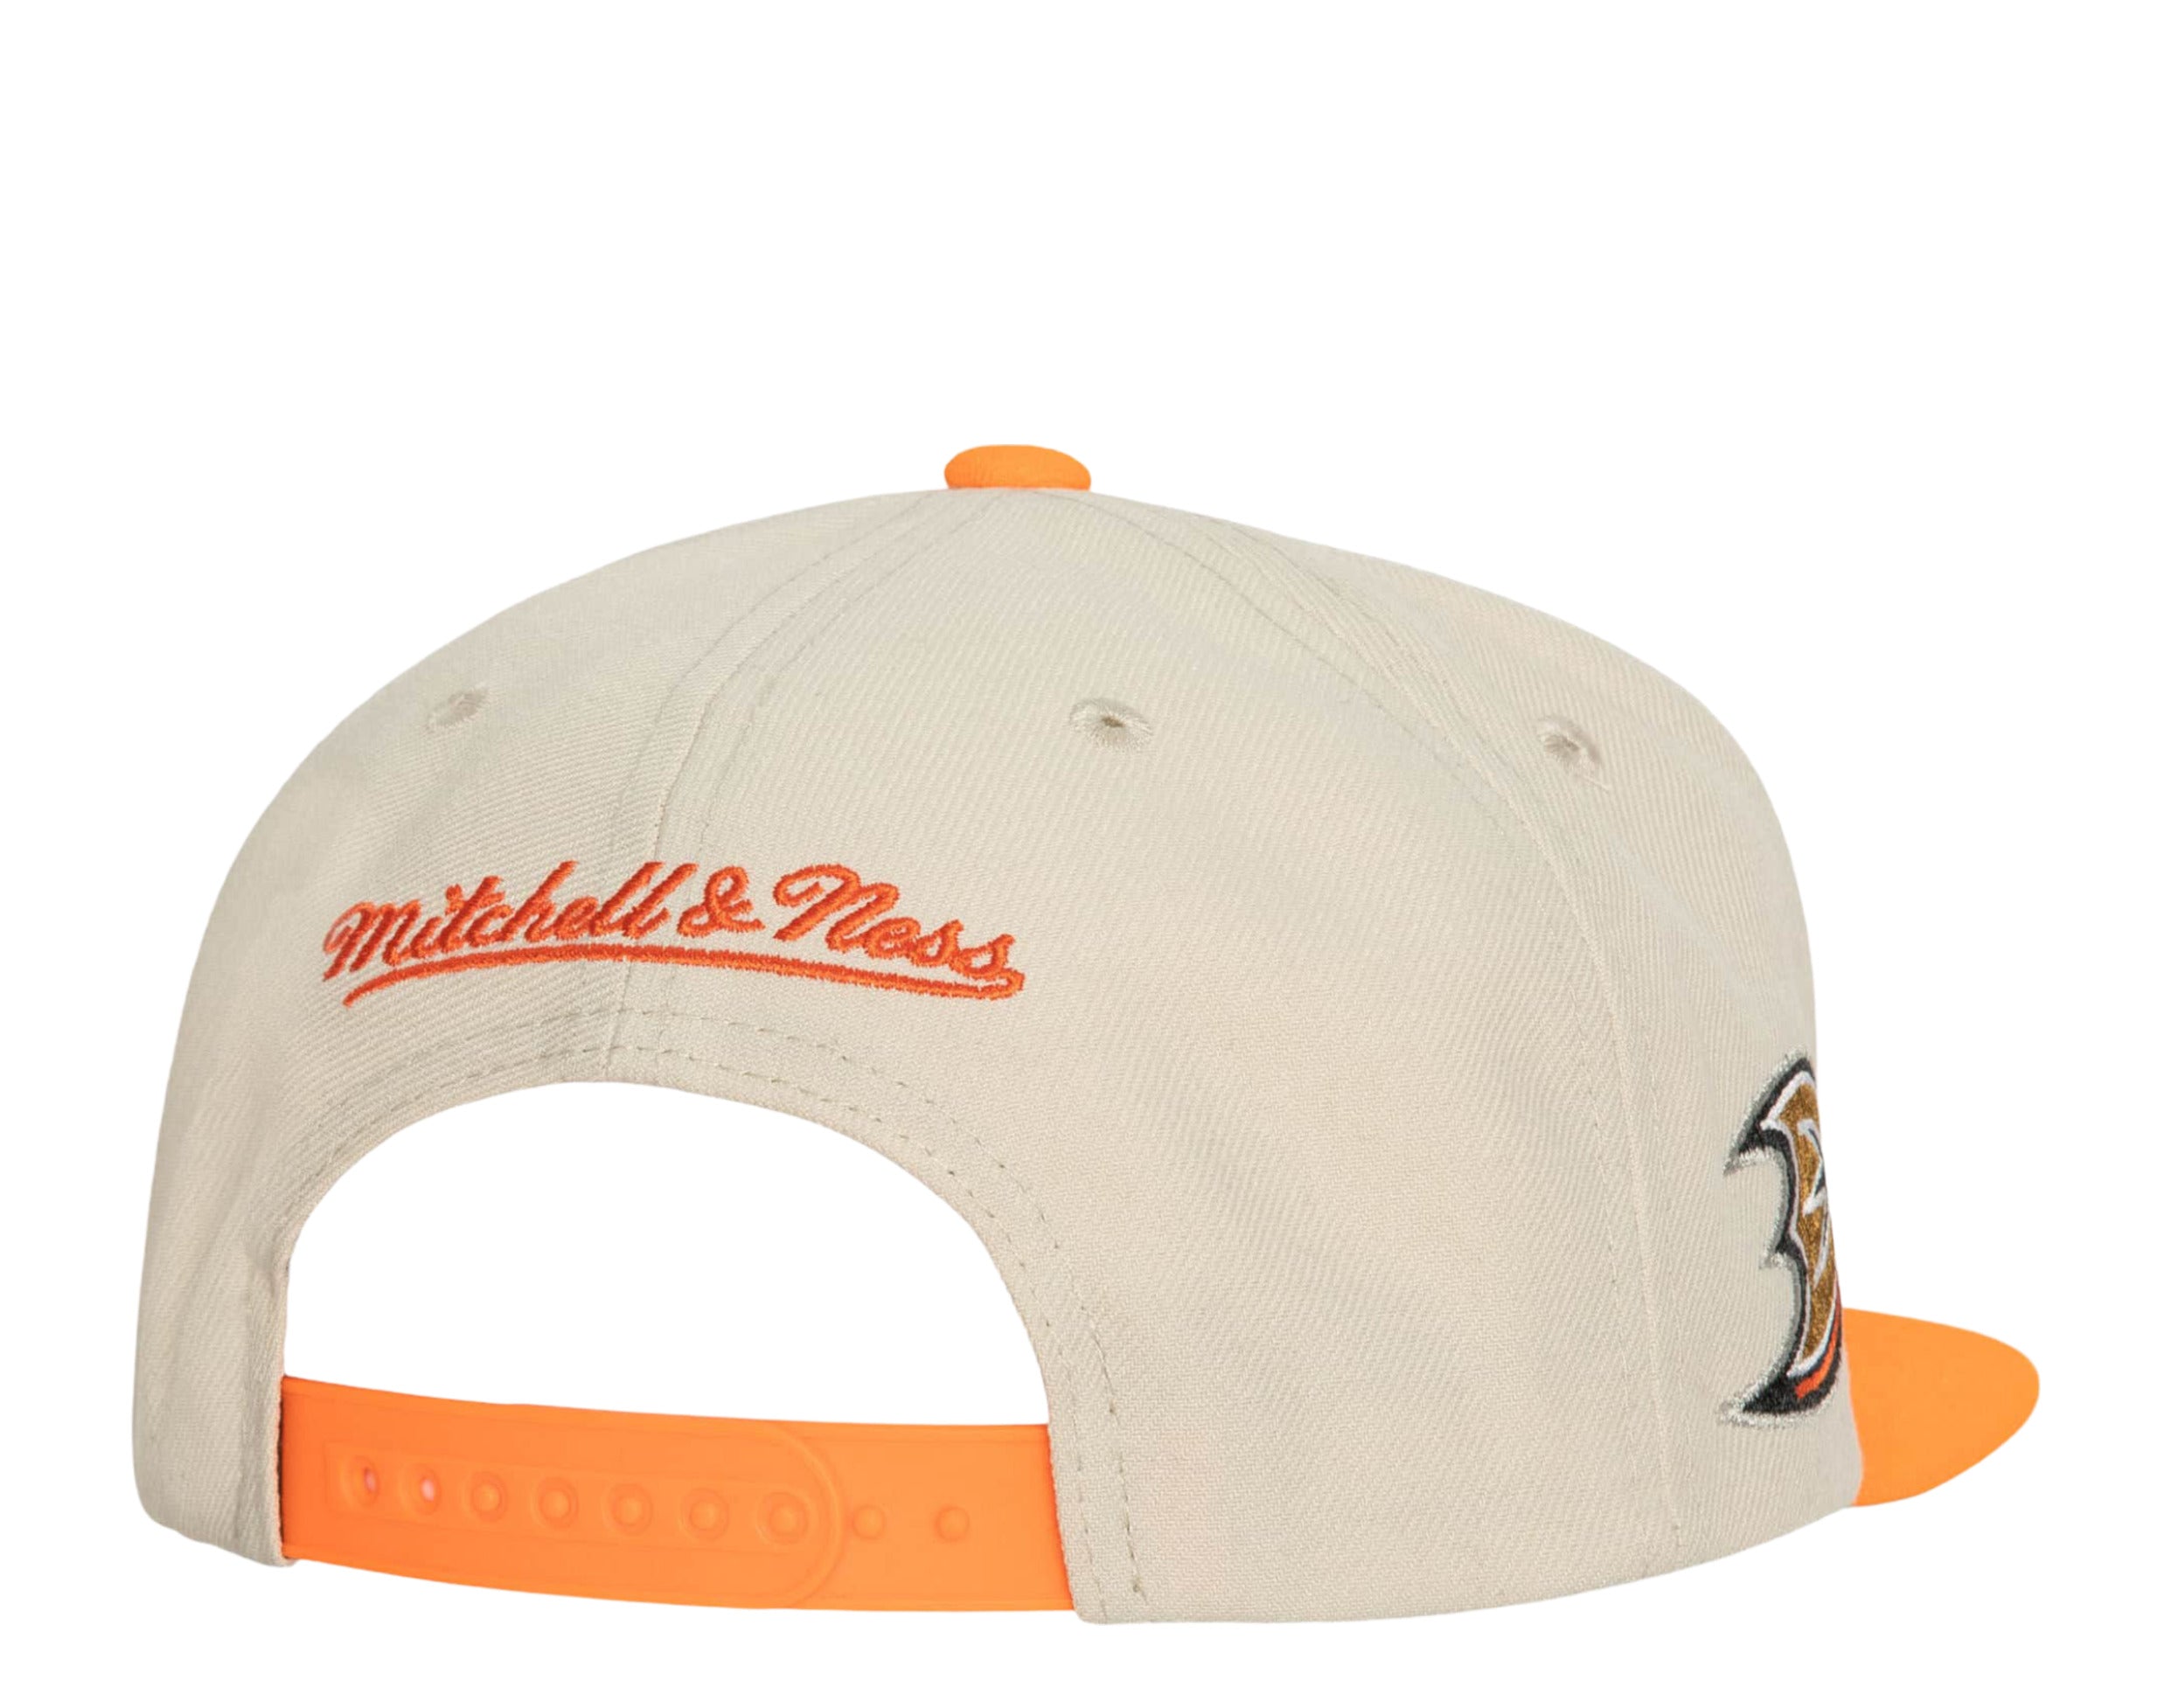 Vegas Golden Knights Mitchell & Ness Vintage Snapback Hat - Cream/Black